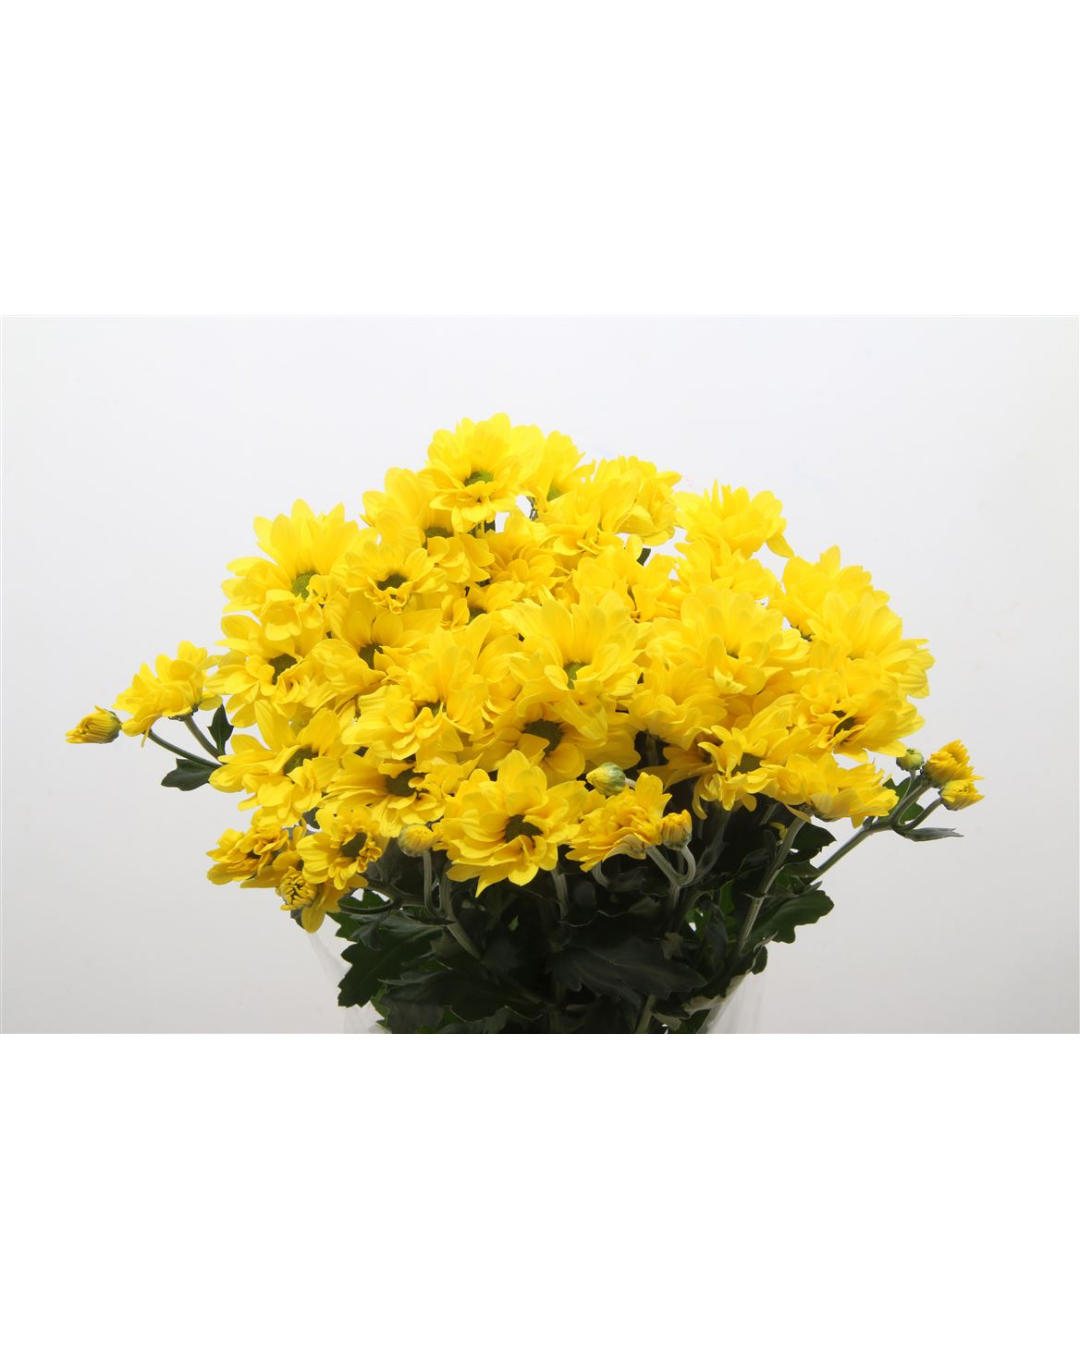 Chrysanthemum Celebrate